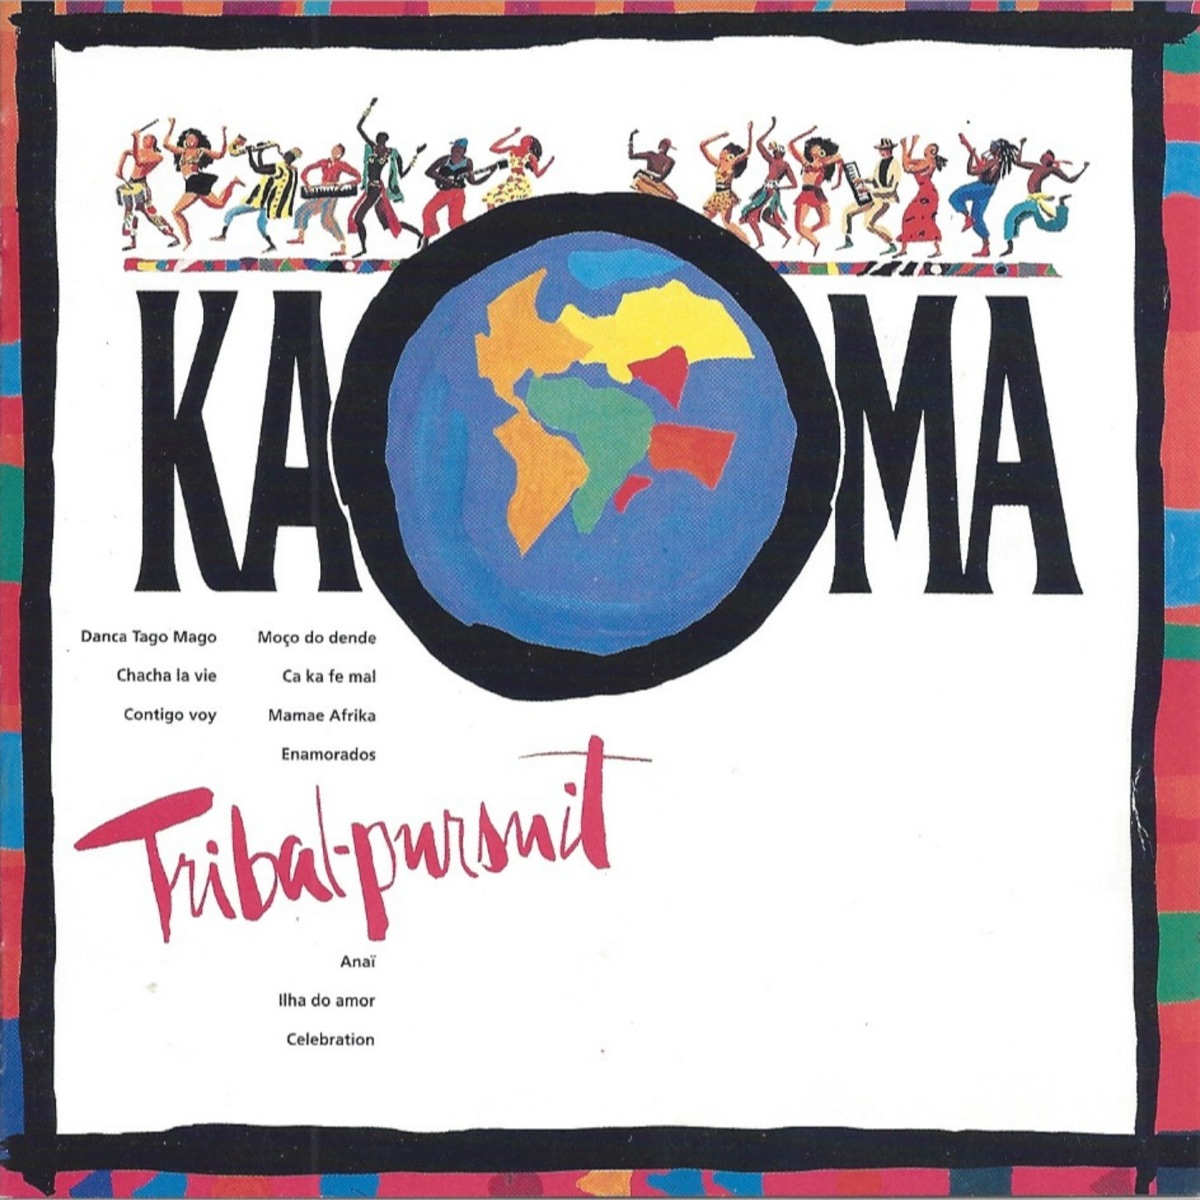 Lambada - Original Version 1989 — Kaoma